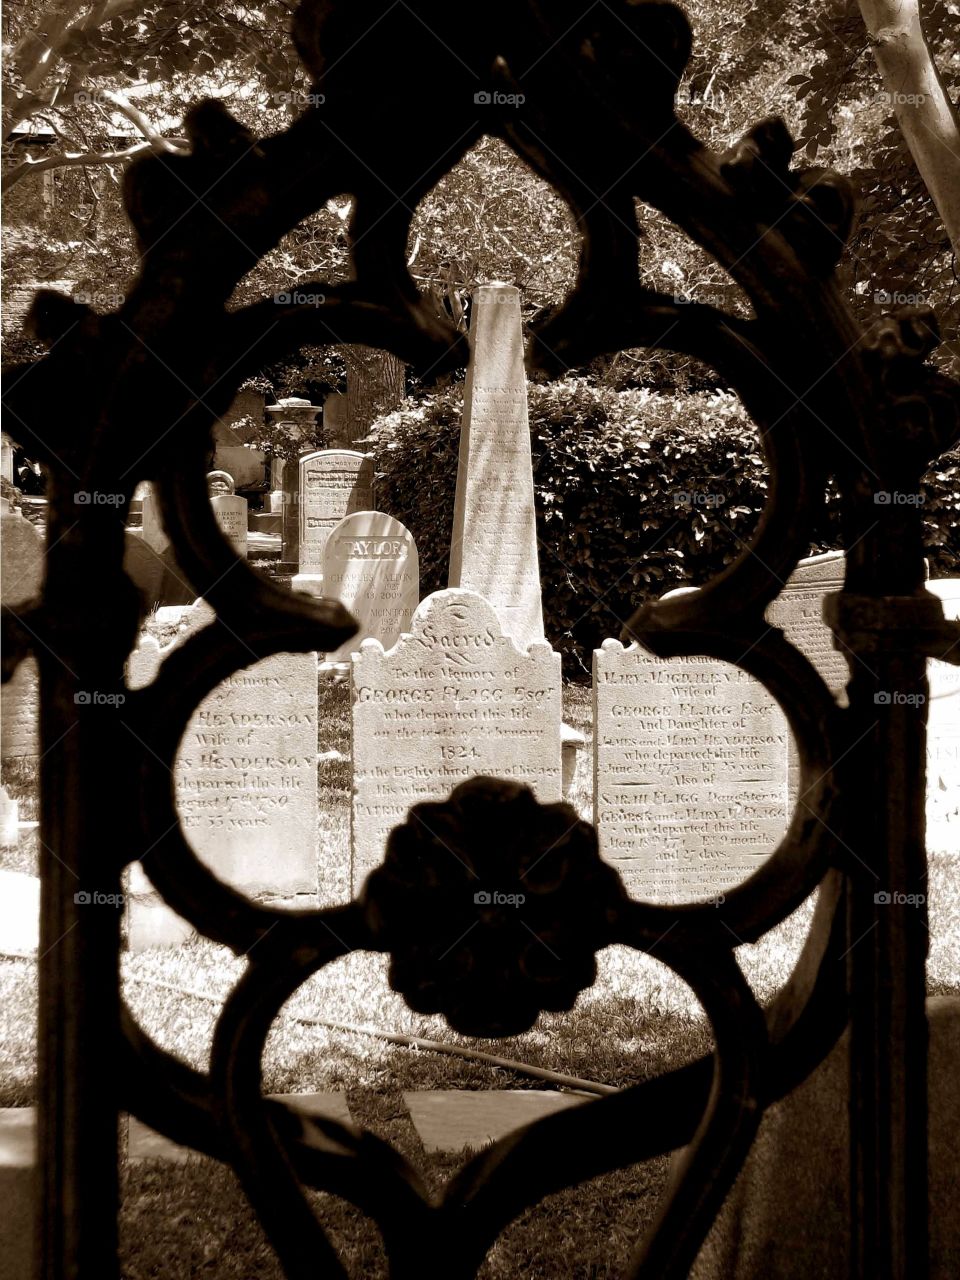 Charleston Cemetery. Cemetery in Charleston, SC